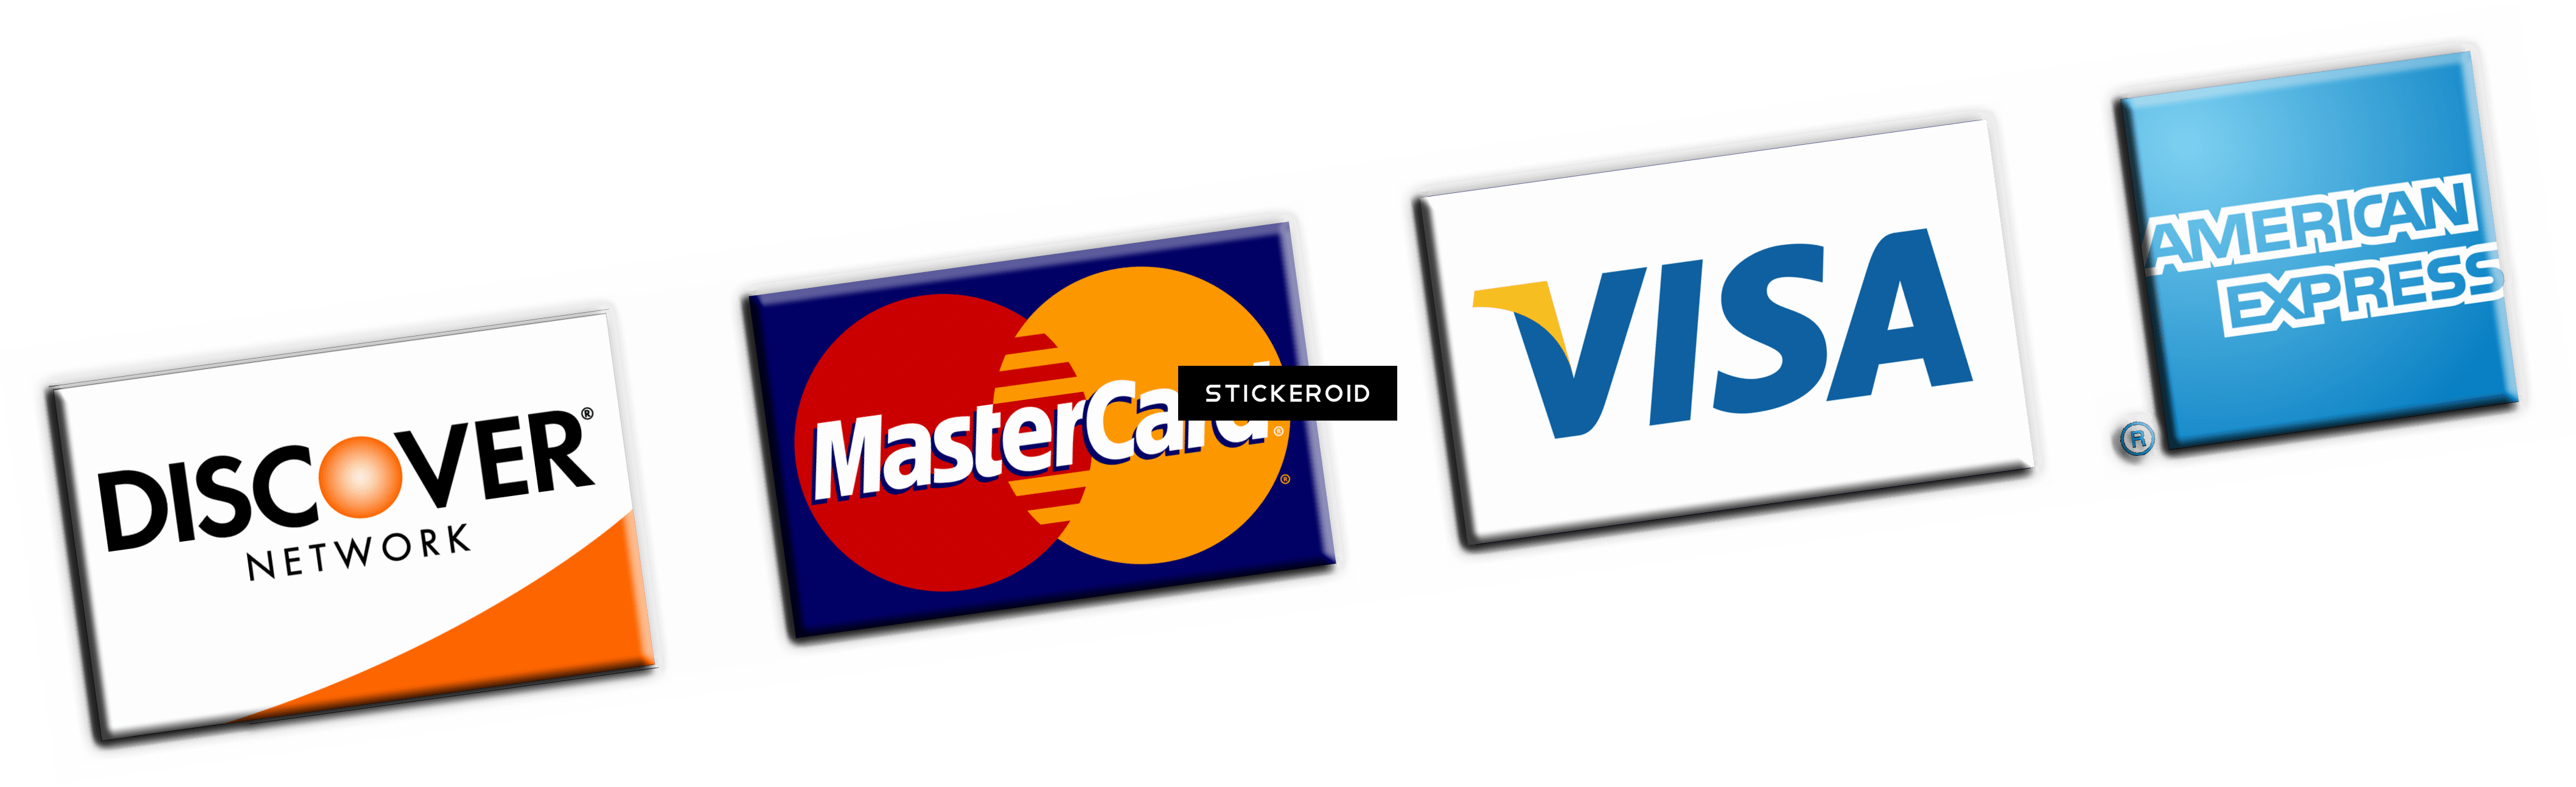 Printable Credit Card Logos